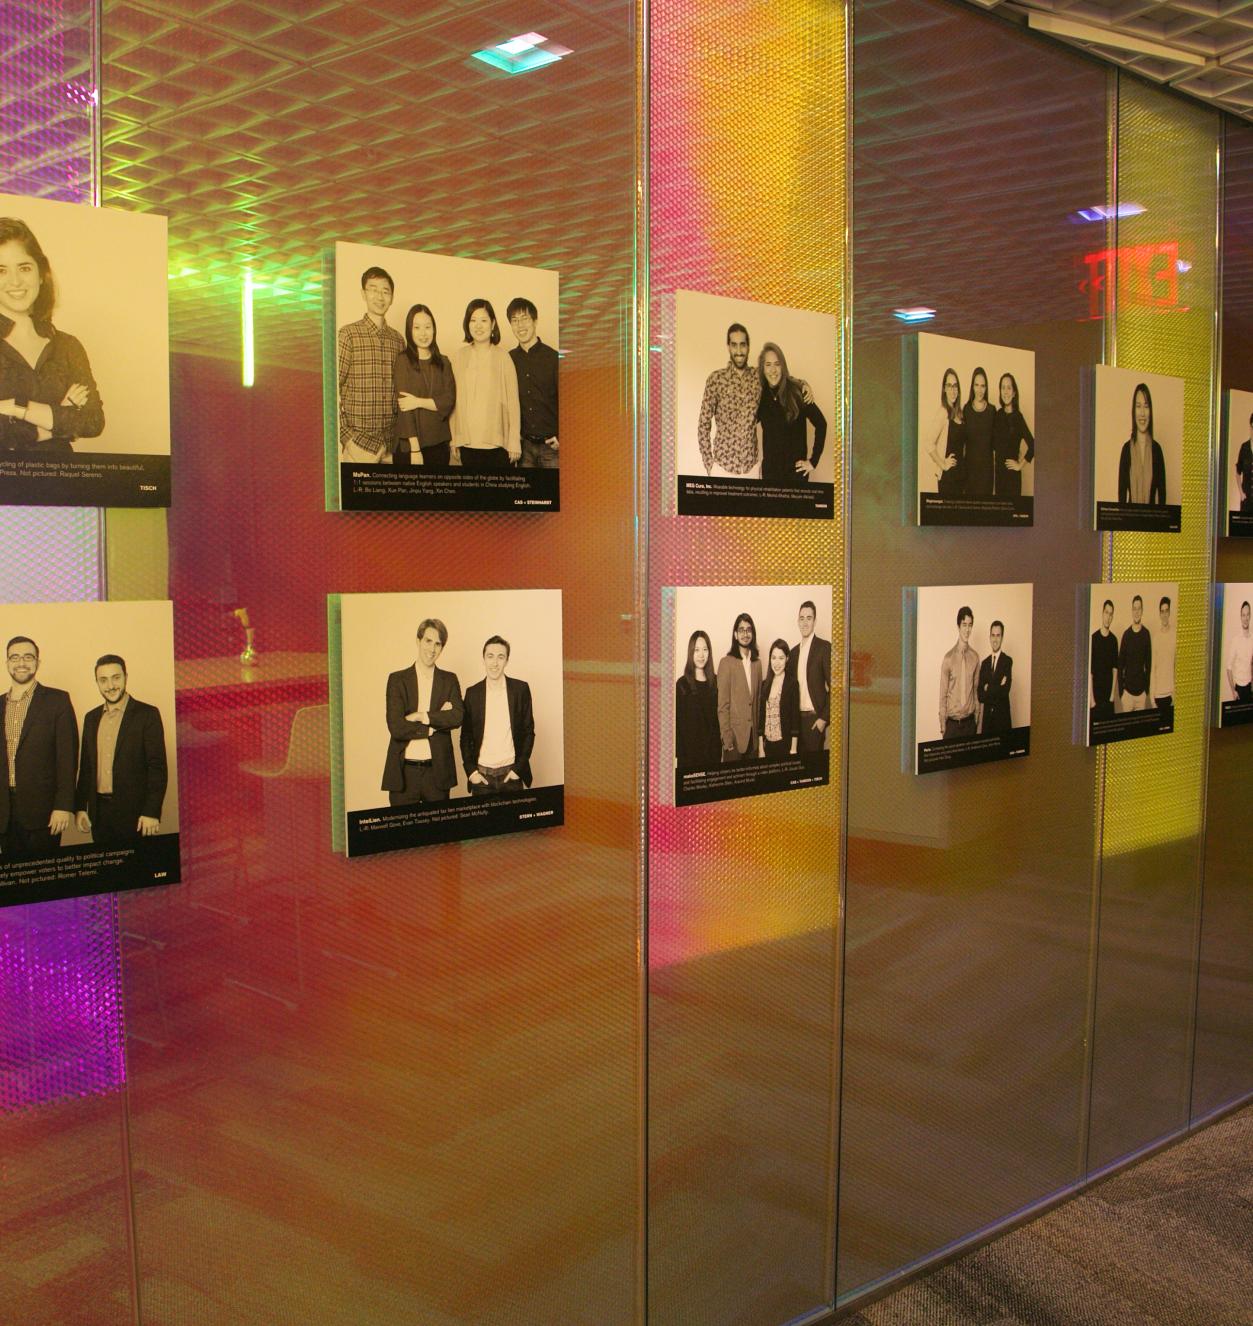 Hallway with pictures of past entrepreneurs challenge participants